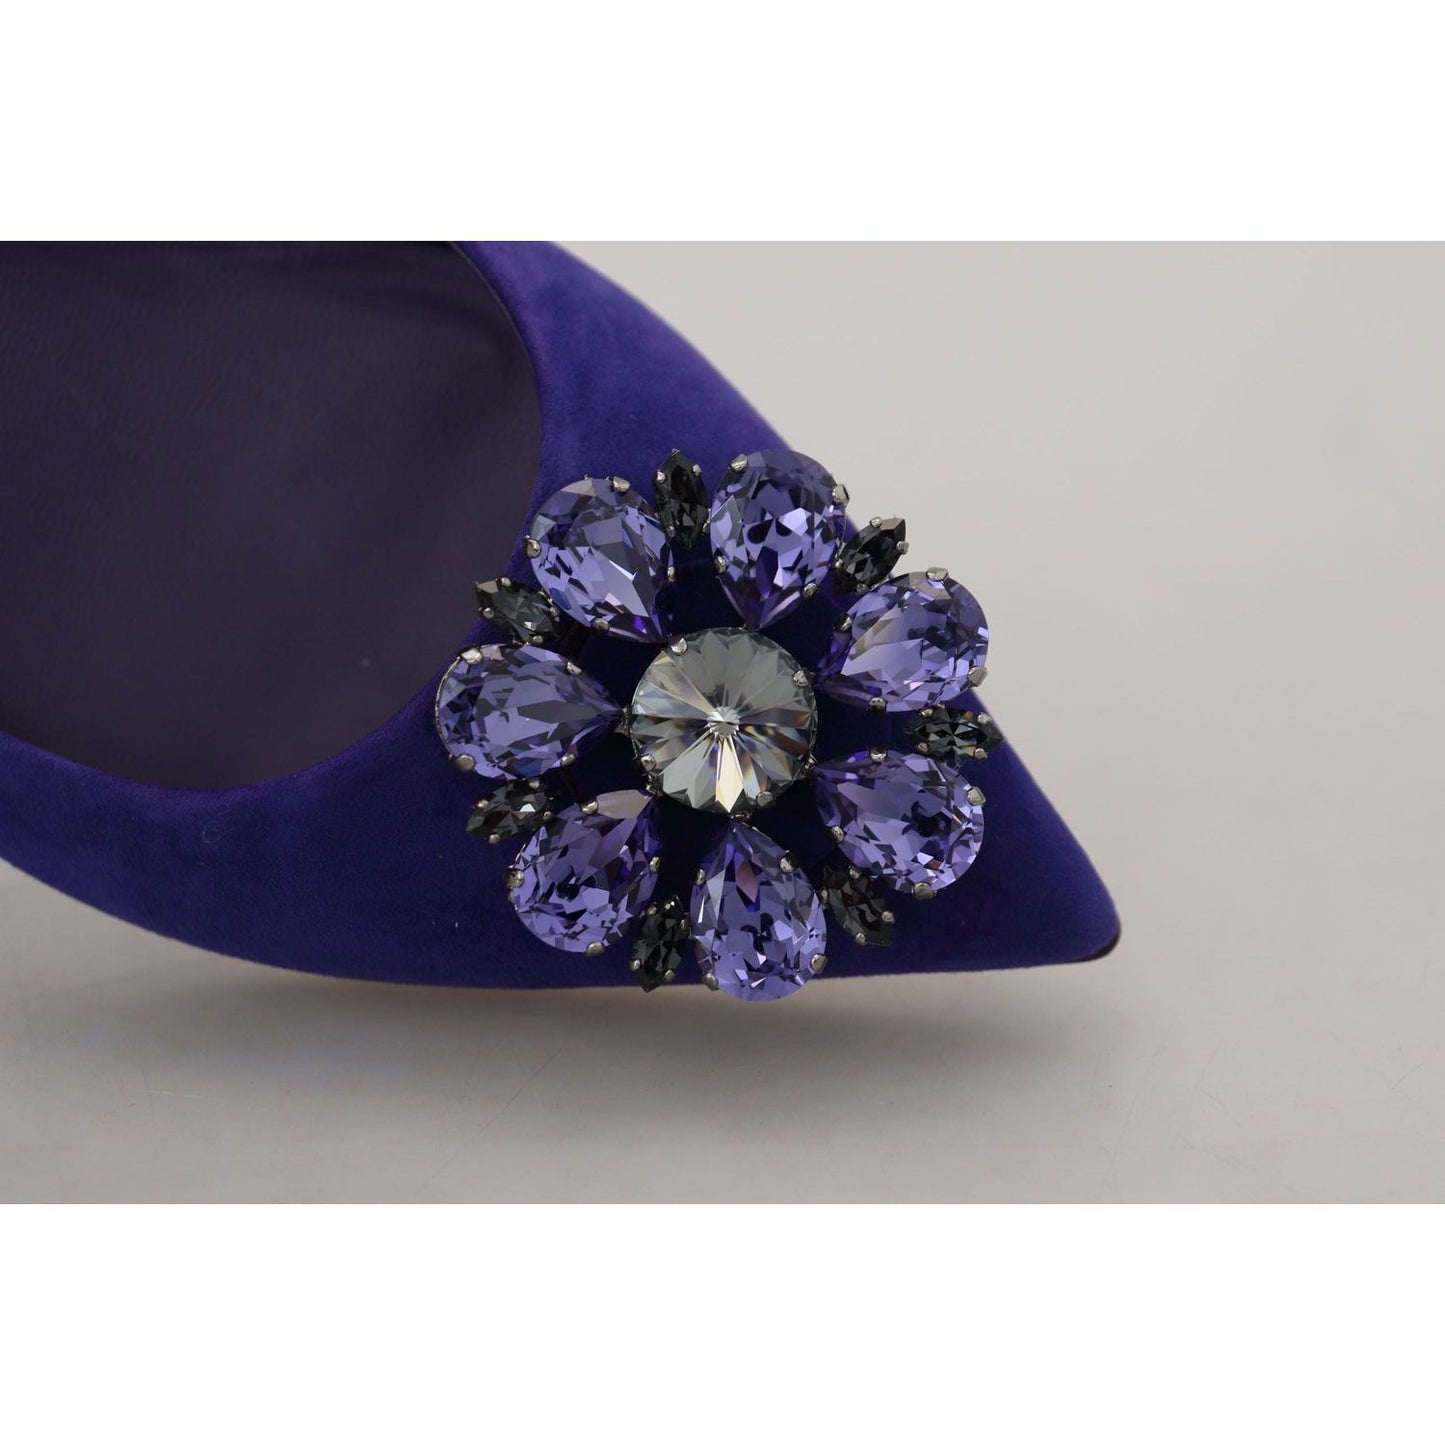 Dolce & Gabbana Embellished Crystal Purple Suede Flats purple-suede-crystals-loafers-flats-shoes IMG_8920-scaled-235446fc-e10.jpg